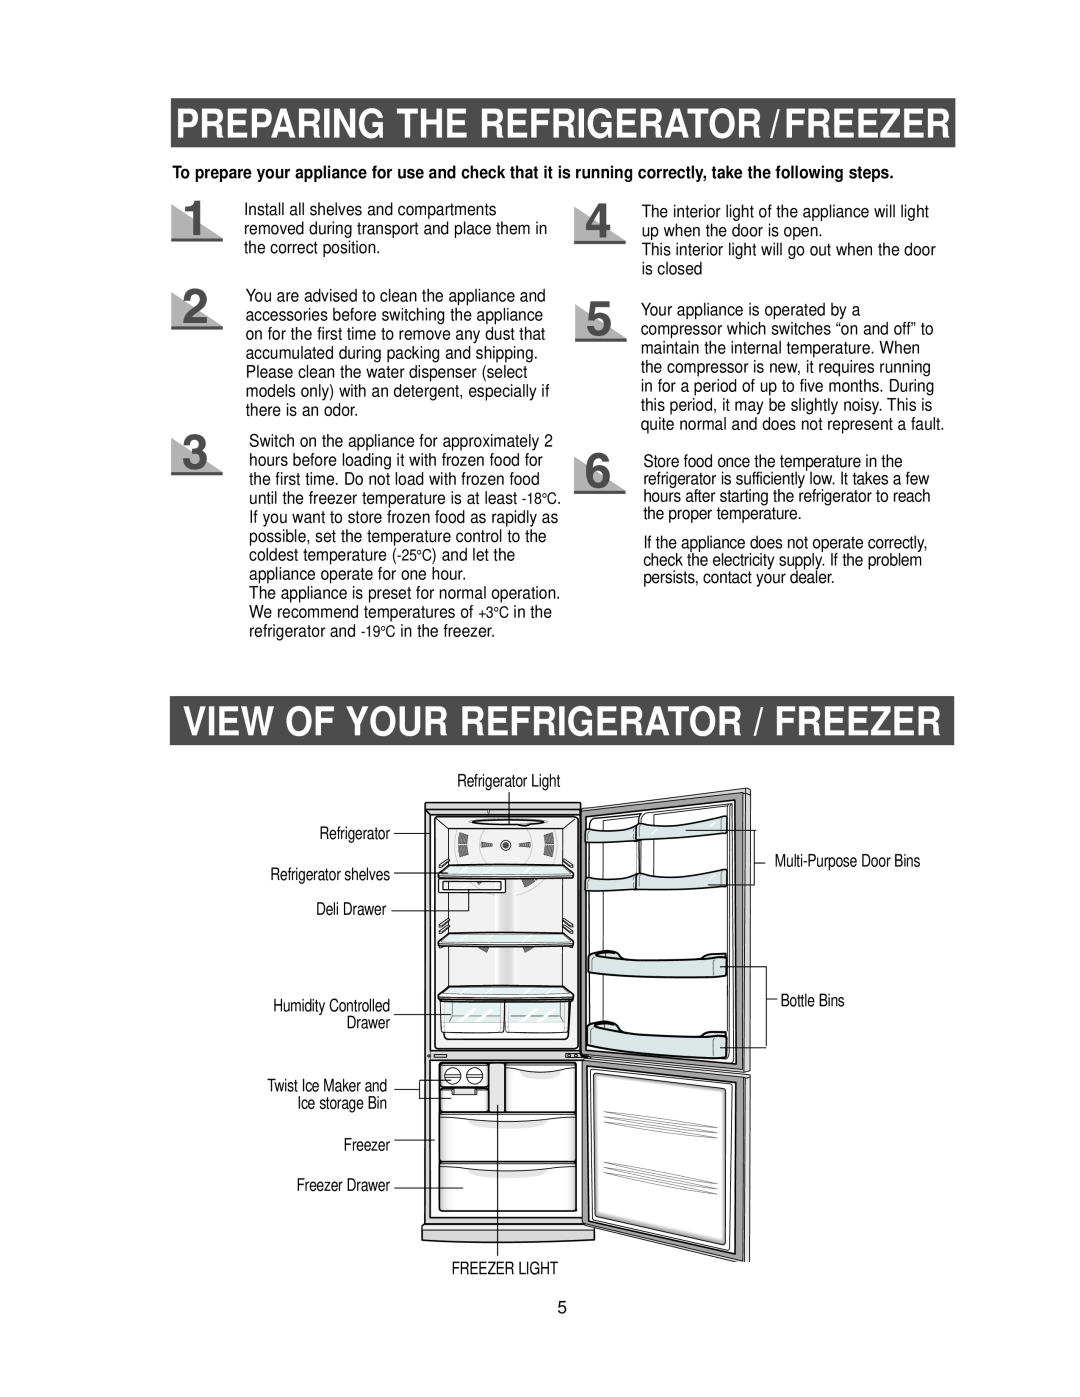 Samsung RB2055SL Preparing The Refrigerator /Freezer, View Of Your Refrigerator / Freezer, Freezer Freezer Drawer 